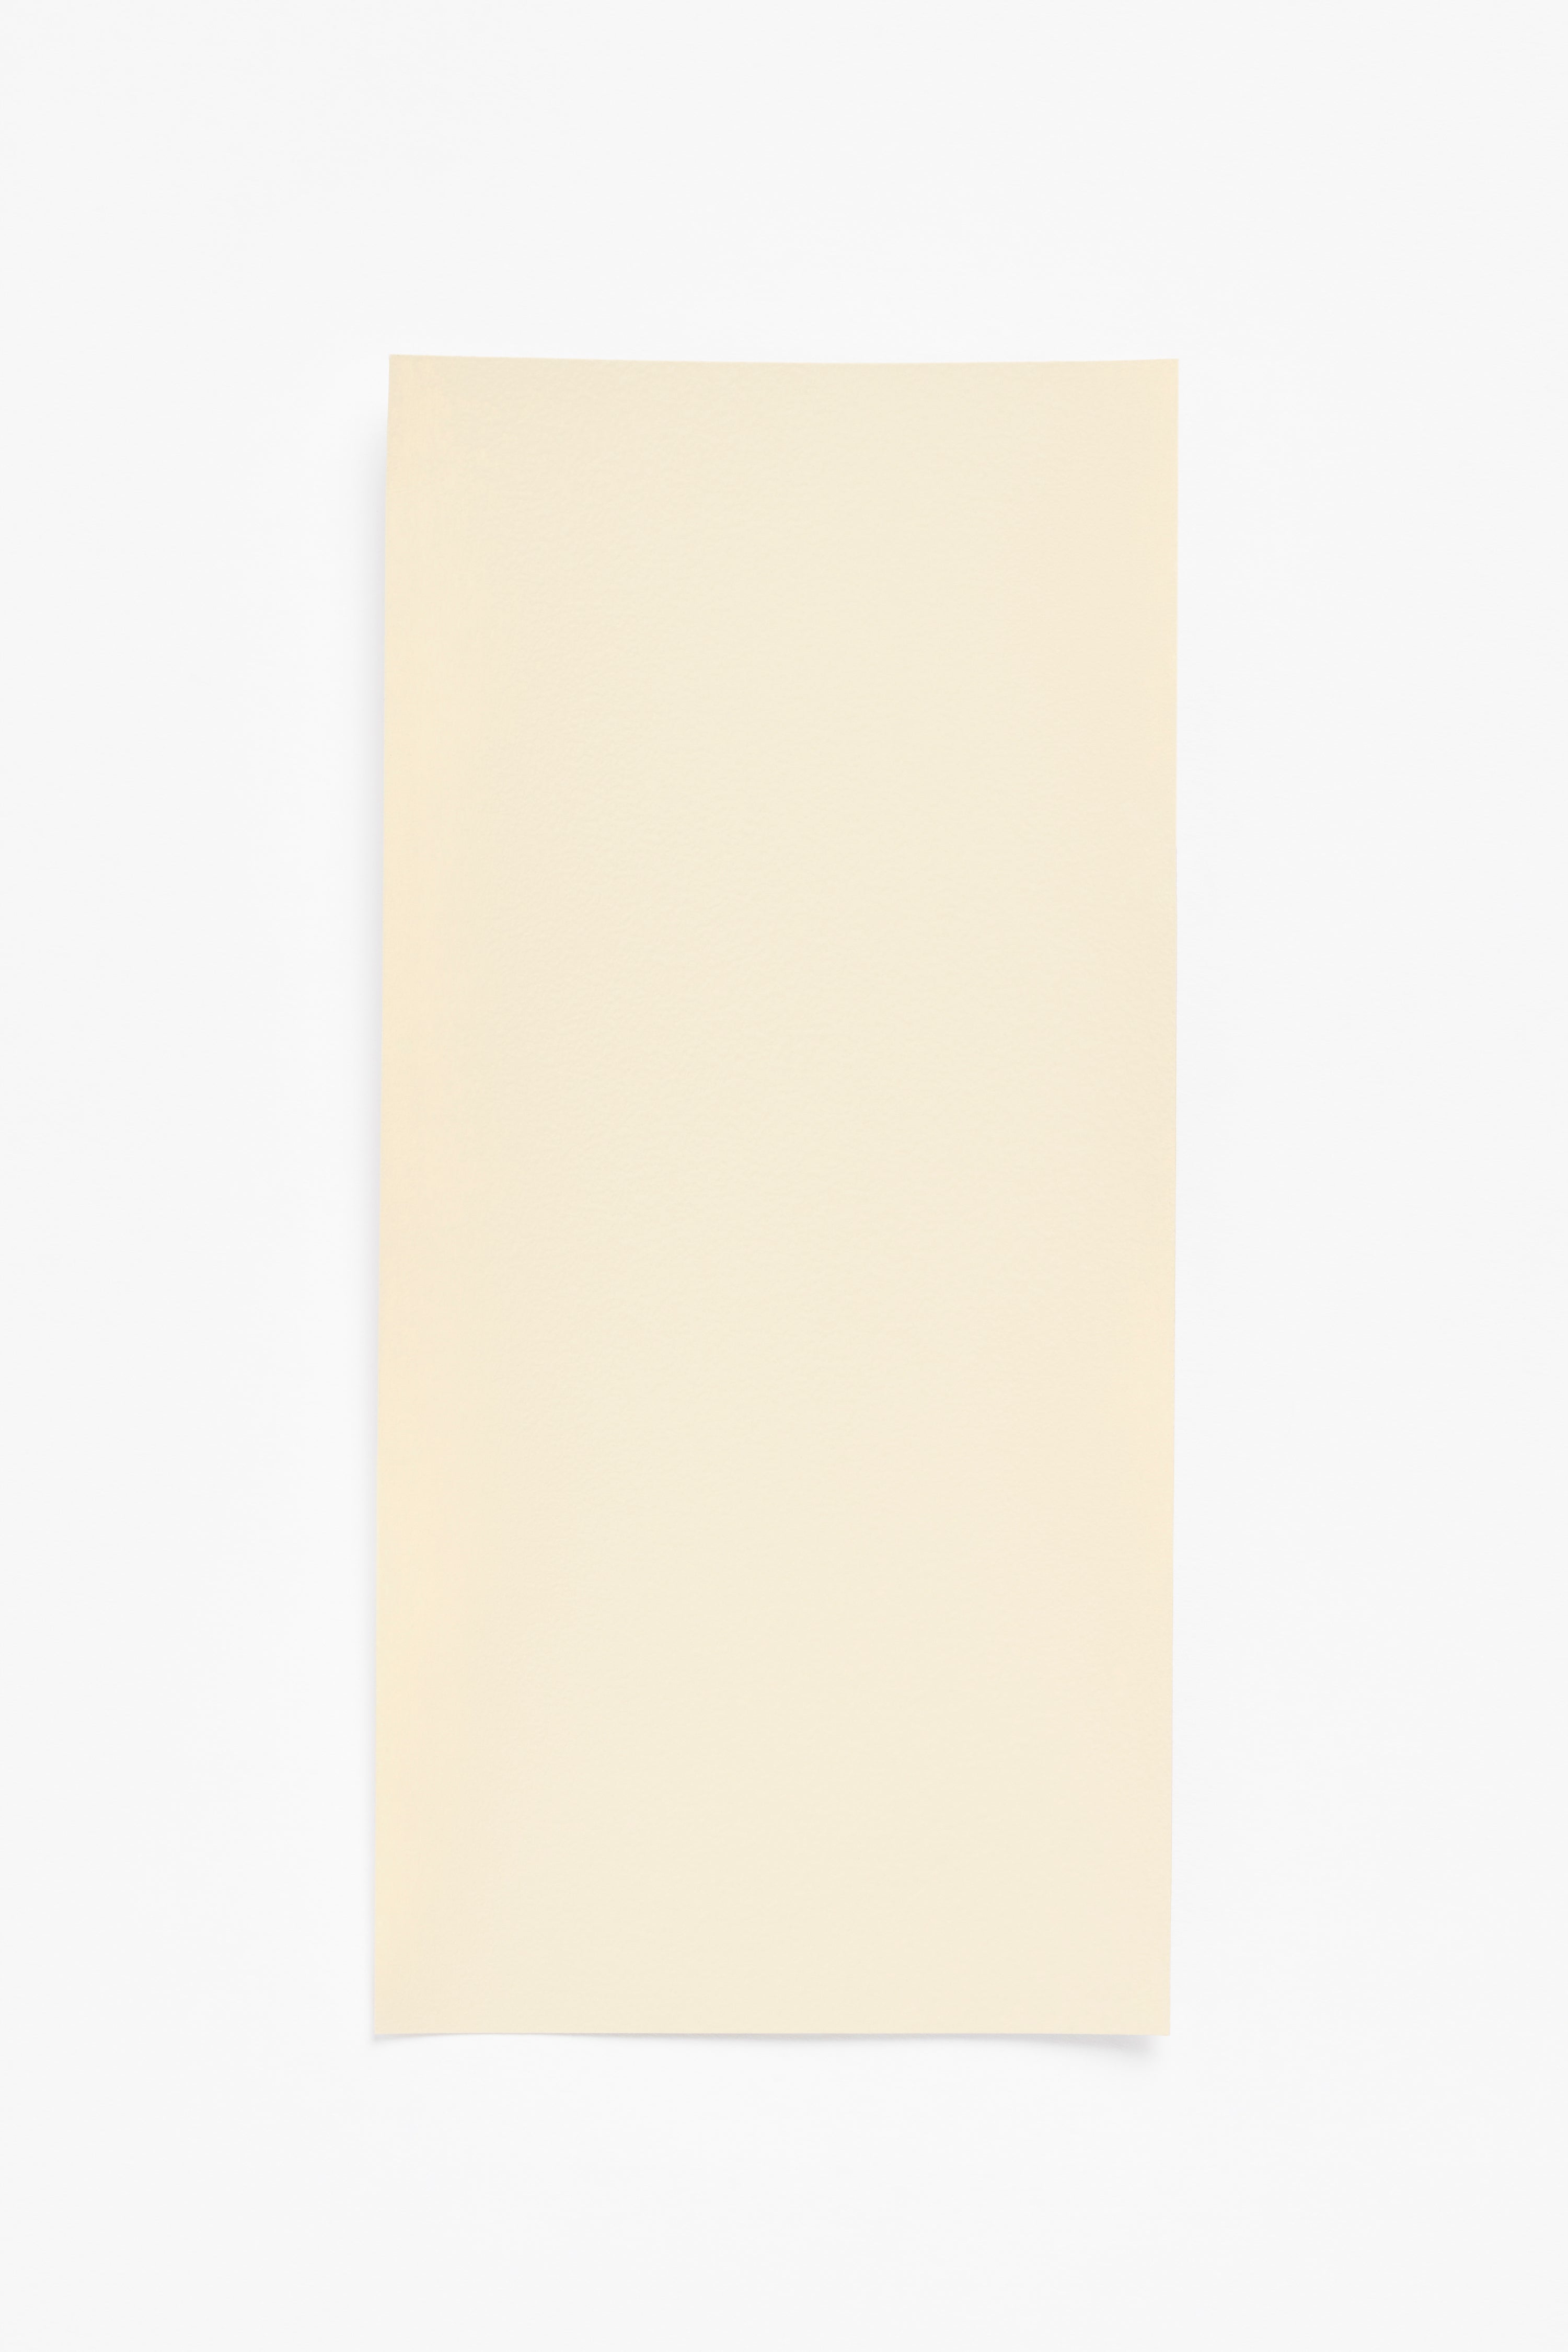 Vanilla — a paint colour developed by Muller Van Severen for Blēo